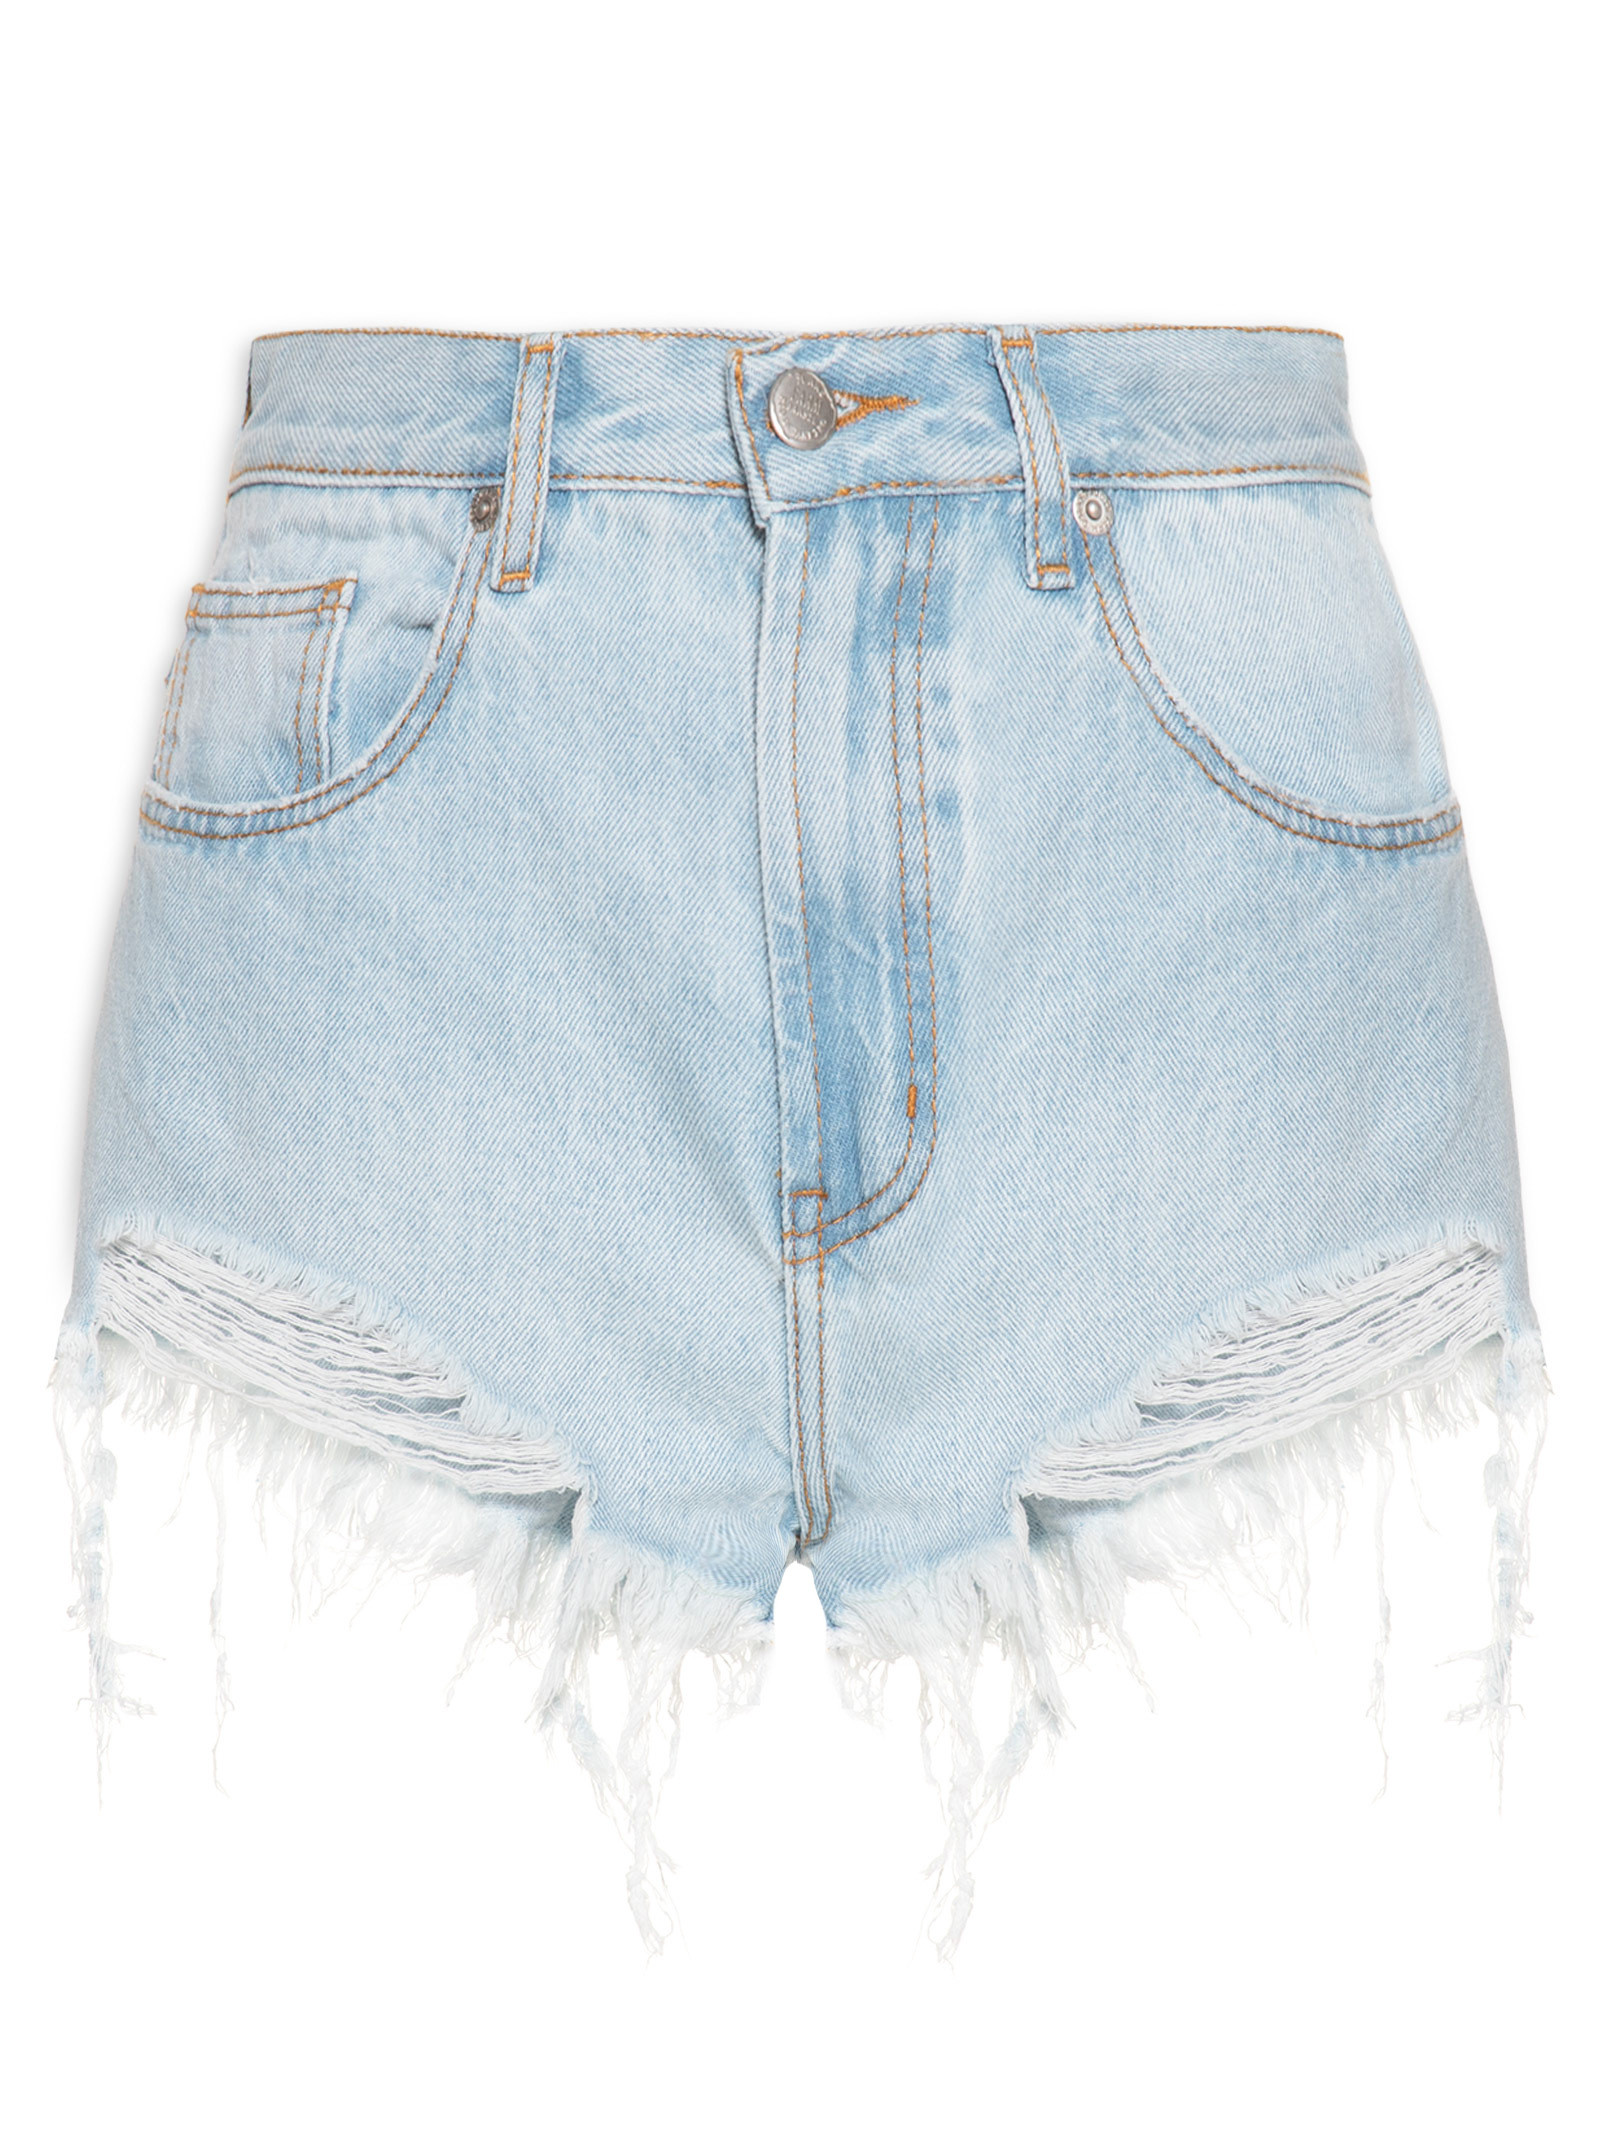 Tan Fishnets & Light Jean Shorts  Shorts with fishnets, Shorts